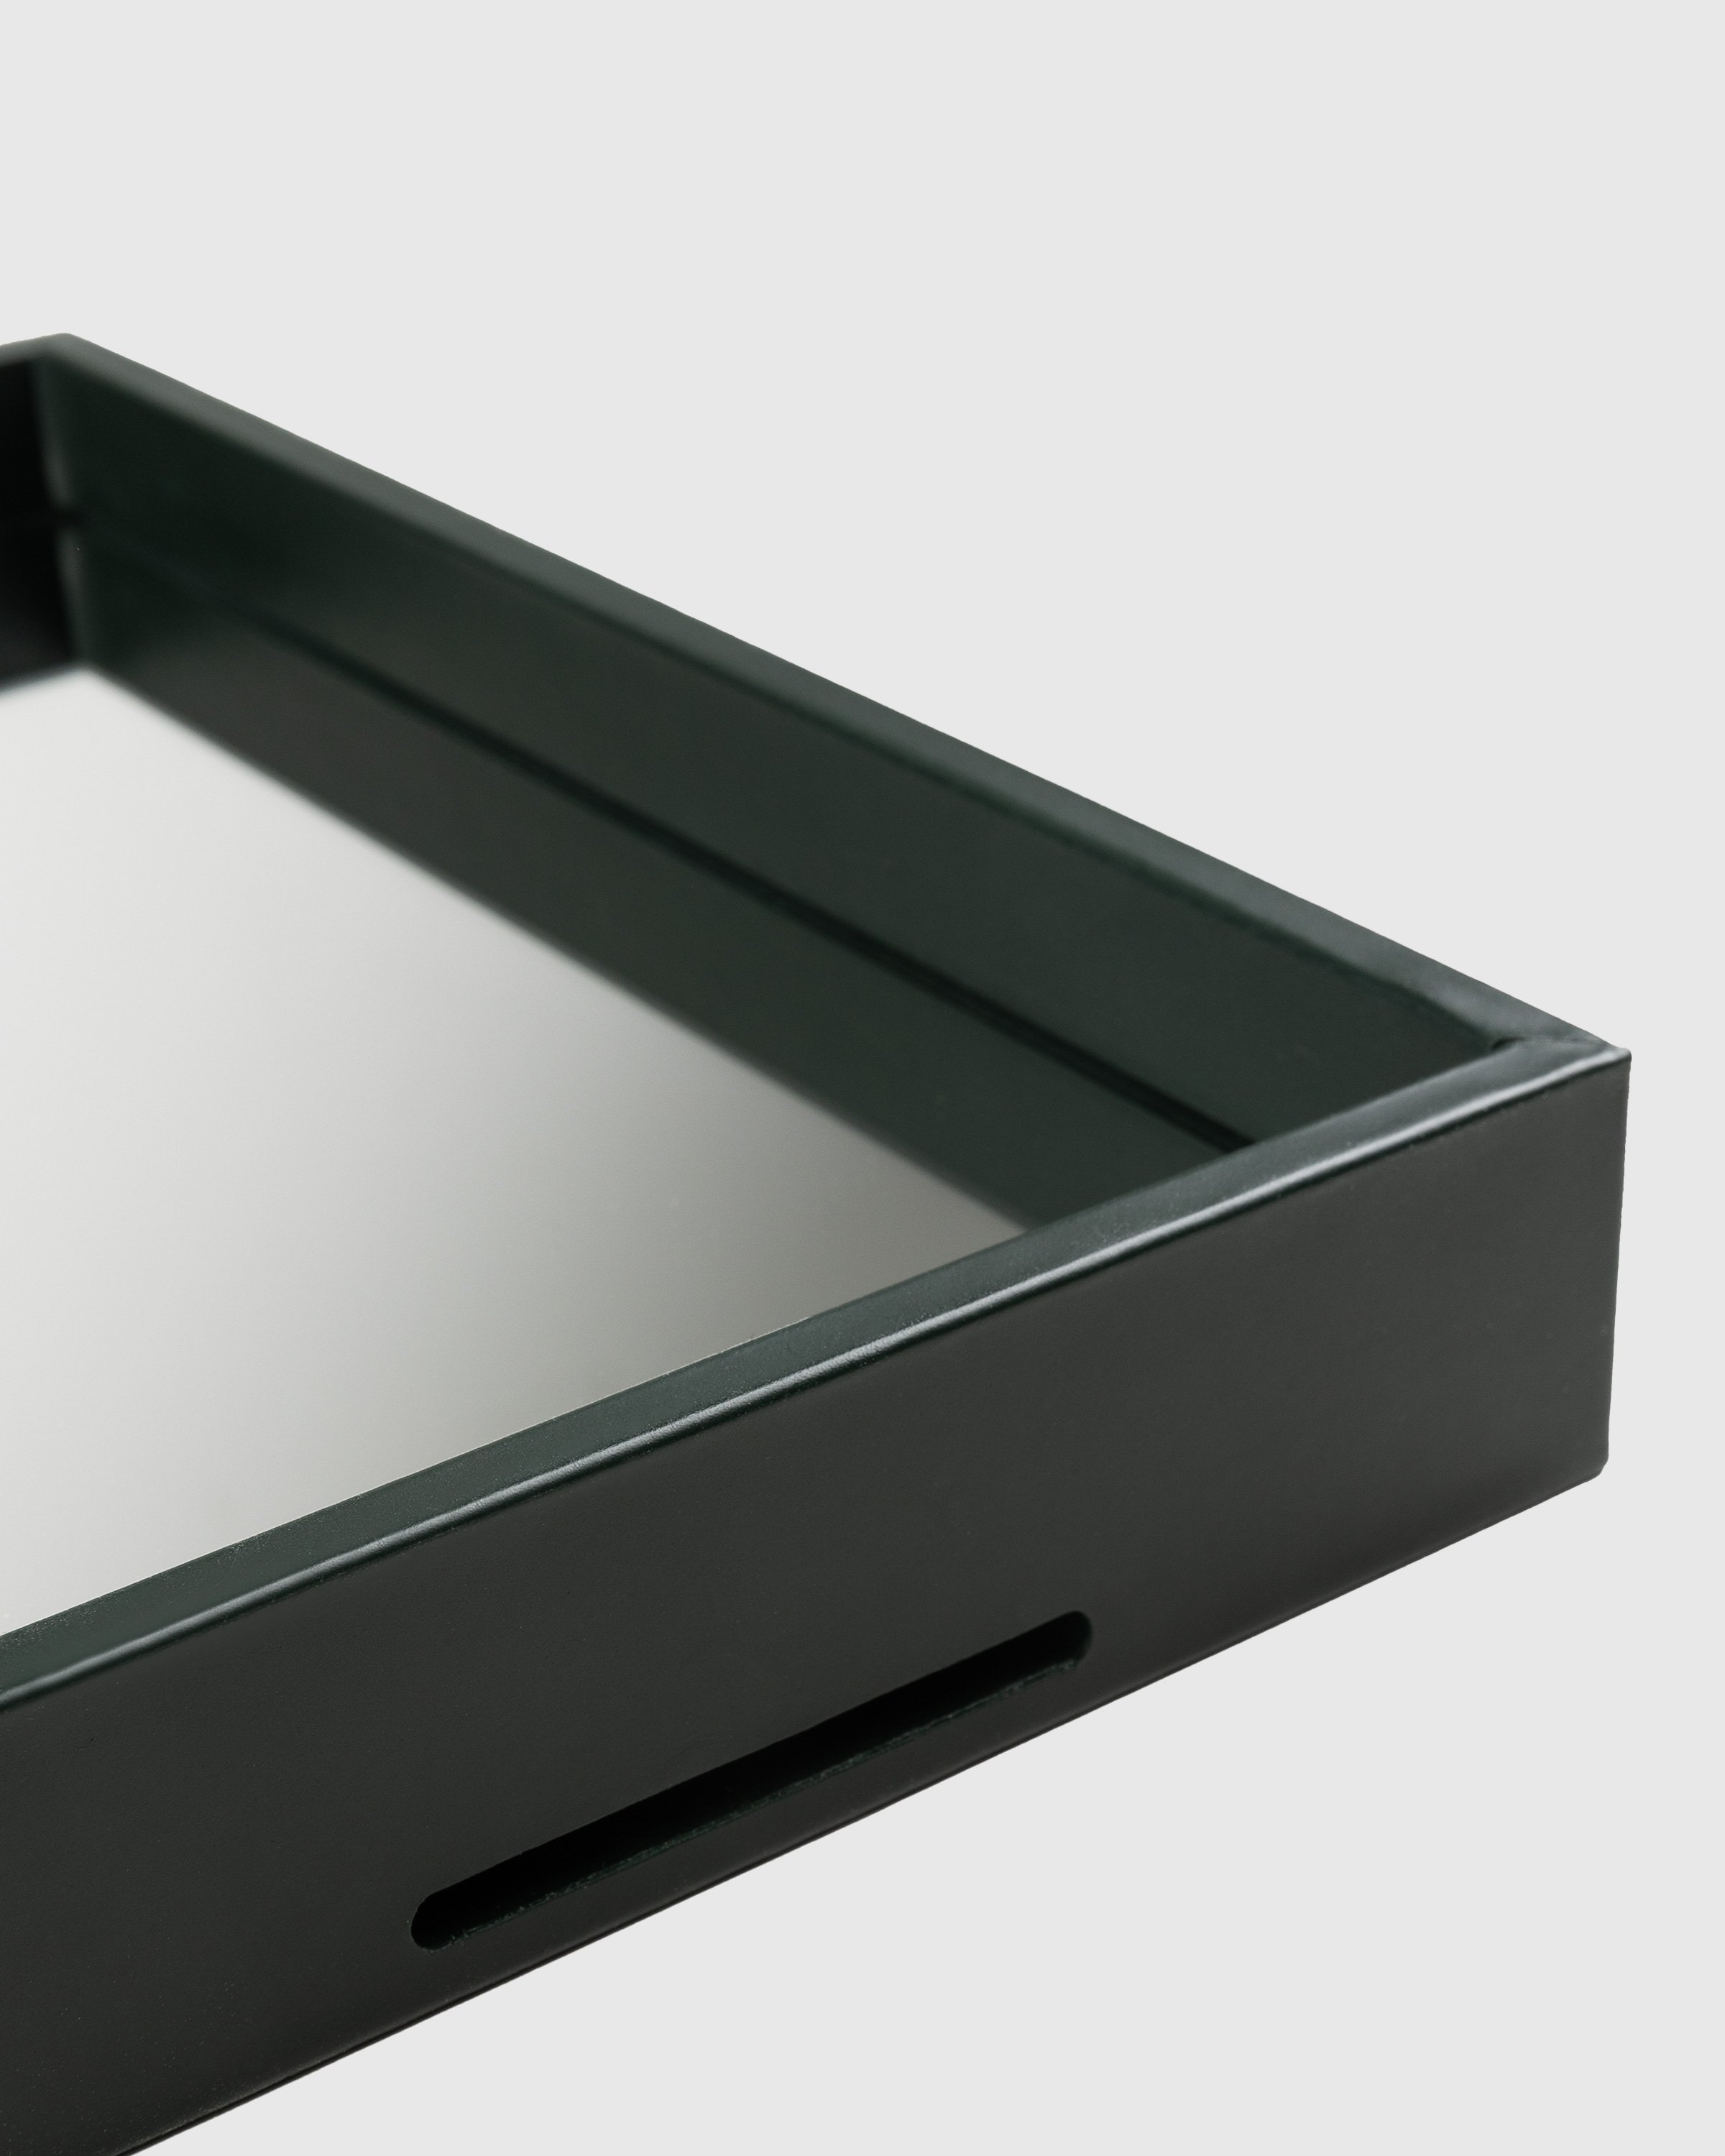 Kvadrat/Raf Simons - Leather Mirror Tray Green - Lifestyle - Green - Image 4